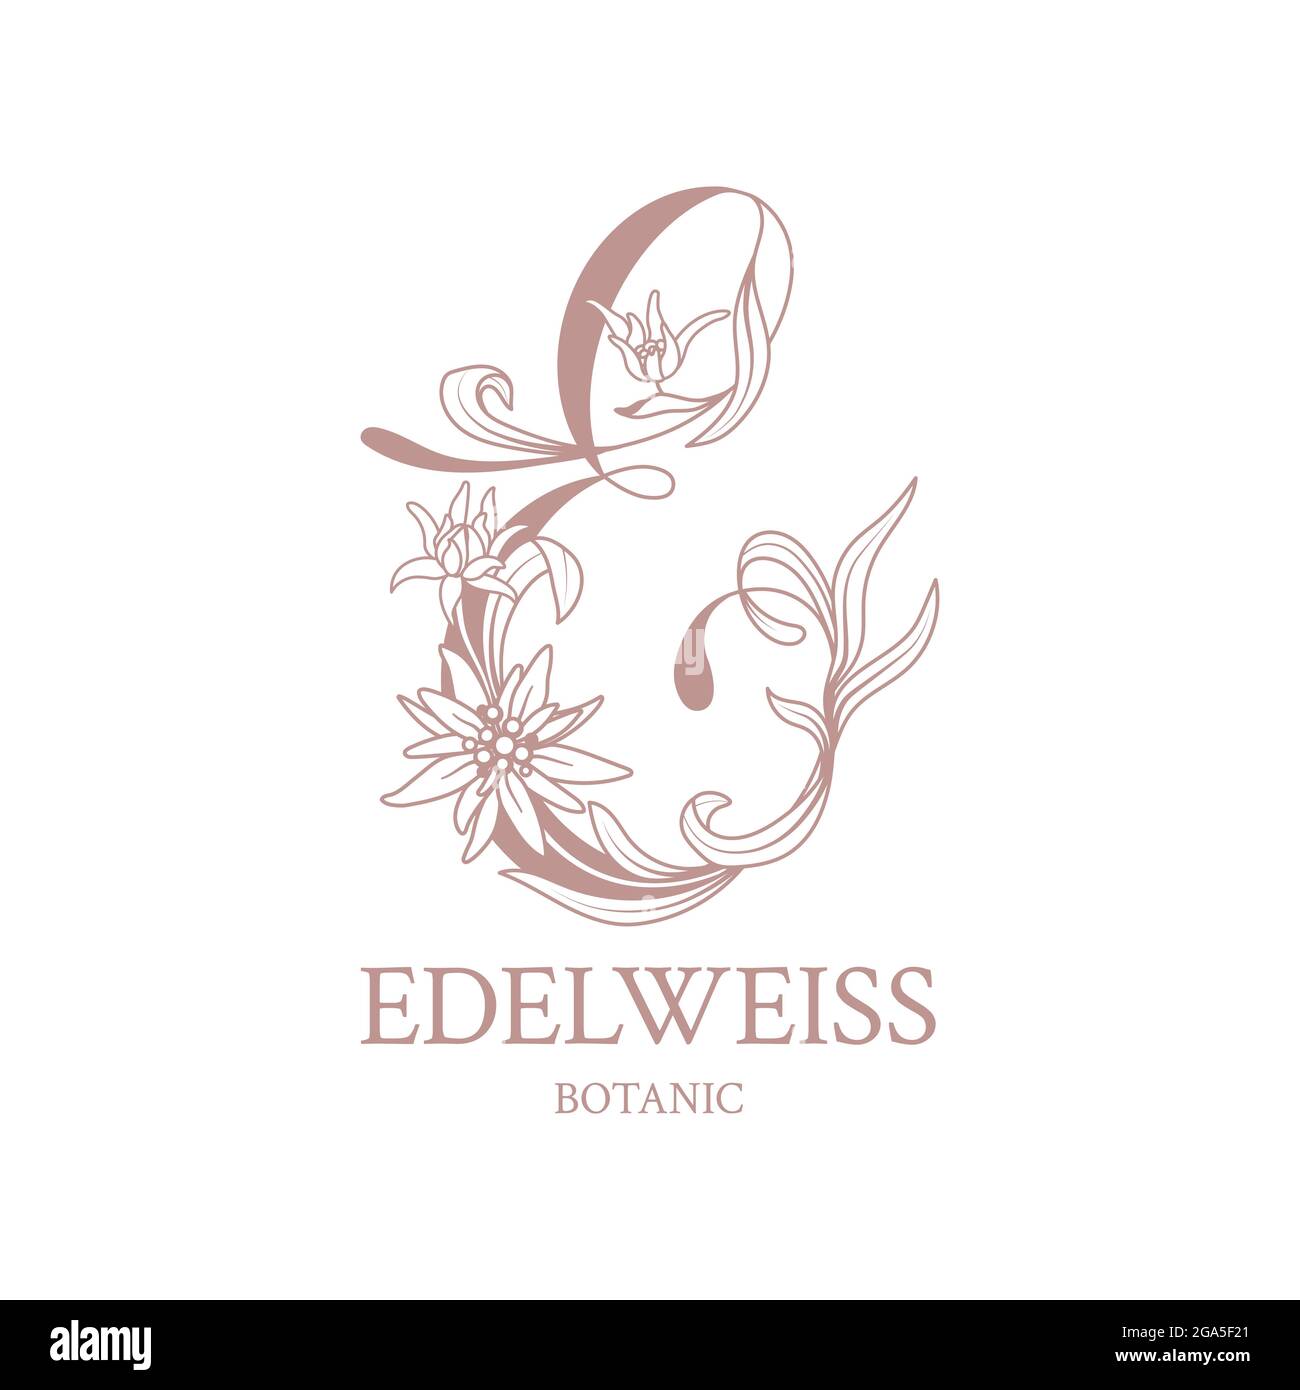 Edelweiss. Floral logo with elegant letter E. Drawn emblem for floral shops or studios, wedding florists, brand name, restaurant, boutique, hotel. Stock Vector